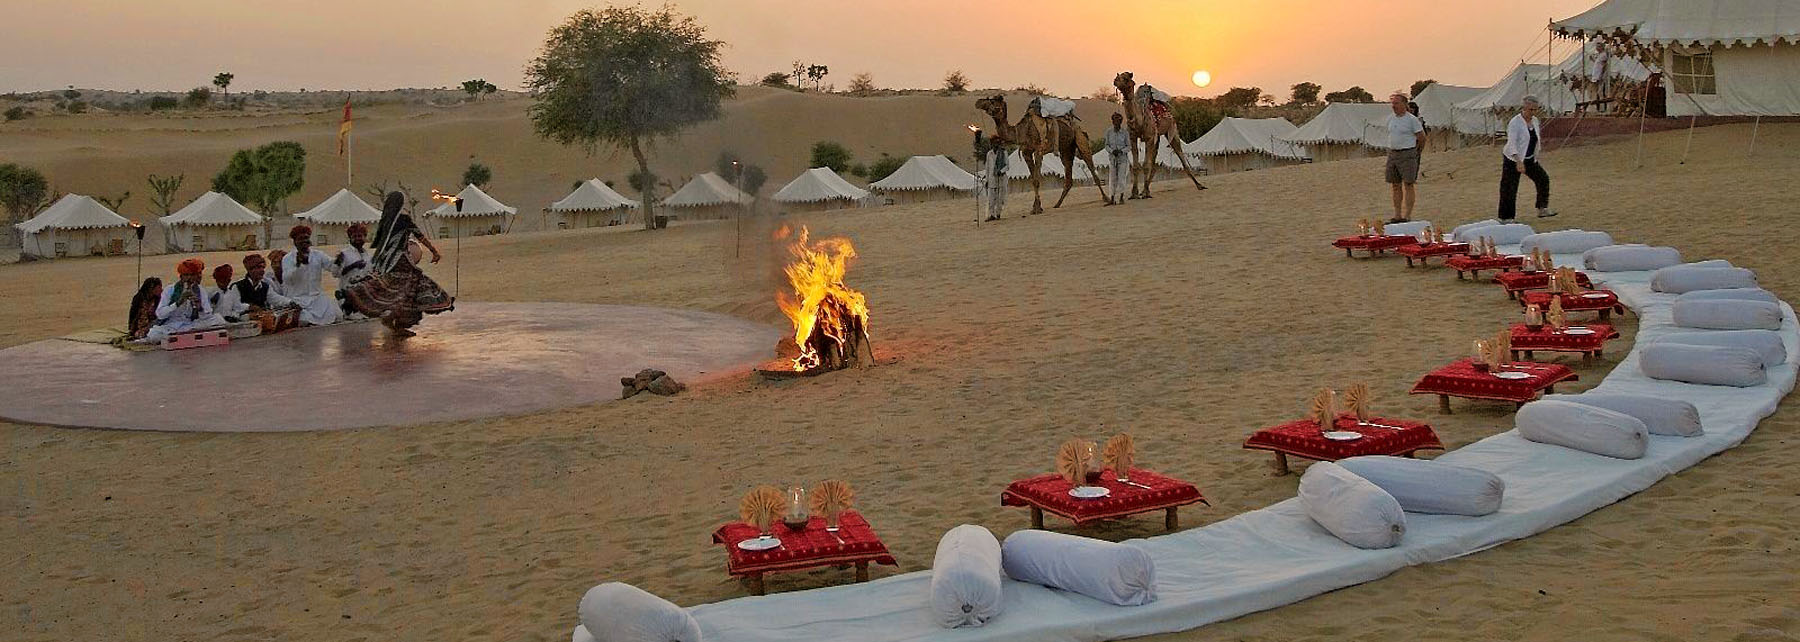 Jaisalmer Sam Sand Dunes Tour Package